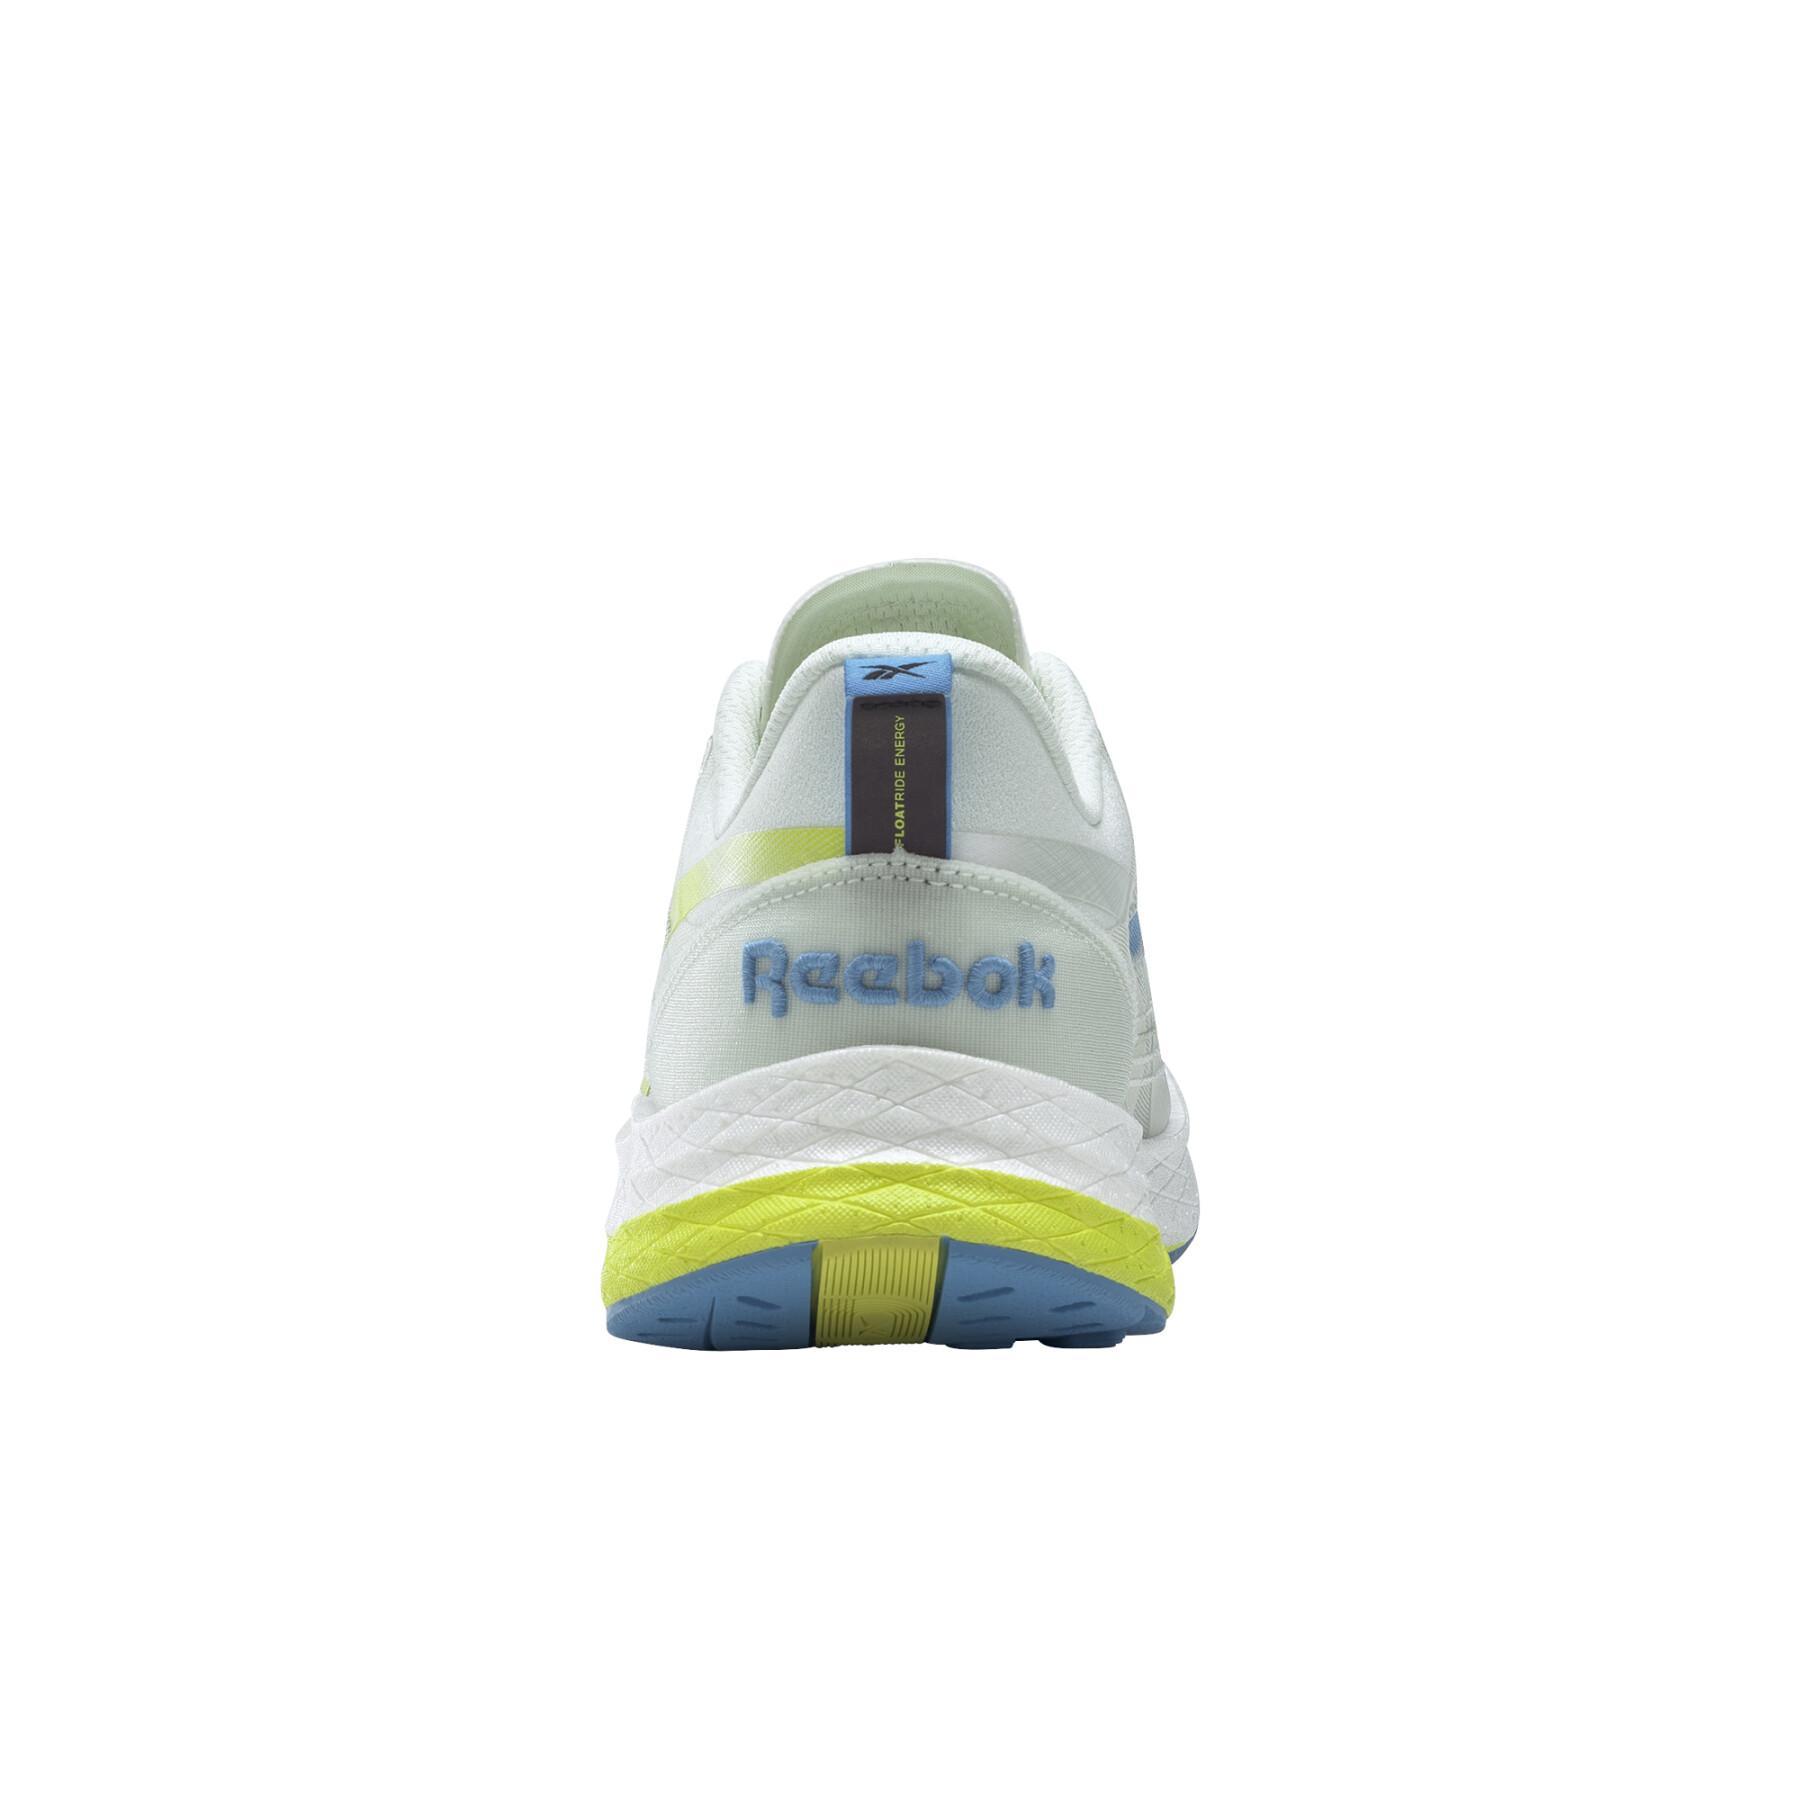 Sapatos Reebok floatride energy 4